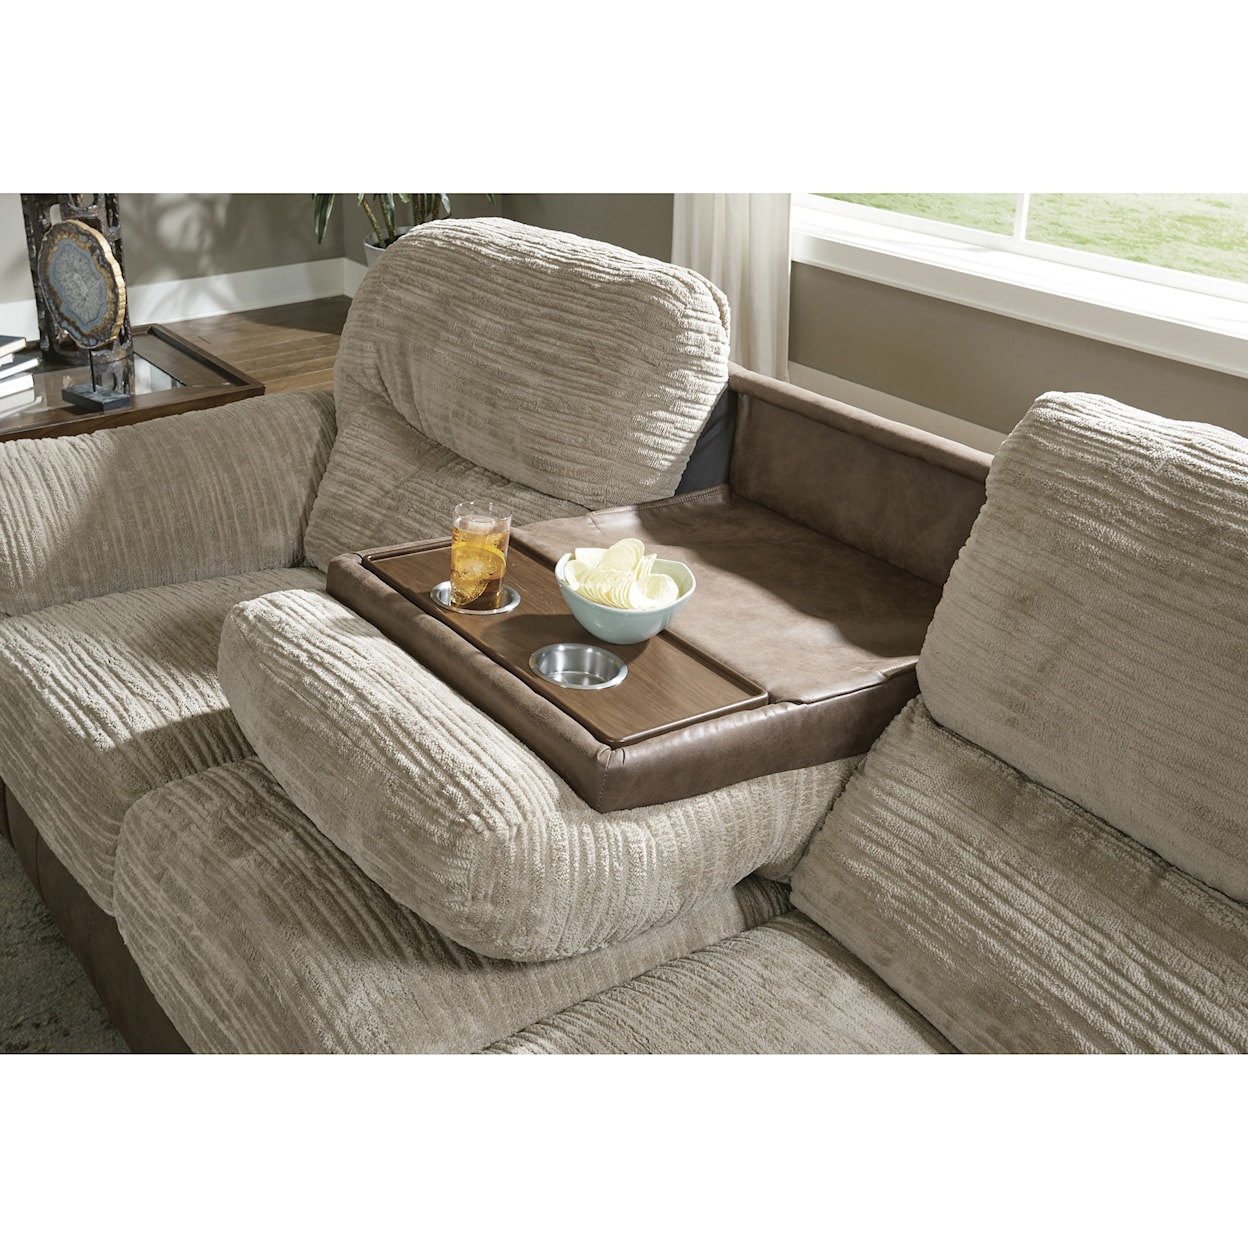 Jackson Furniture 5455 McMahon Sofa w/ Drop Down Table